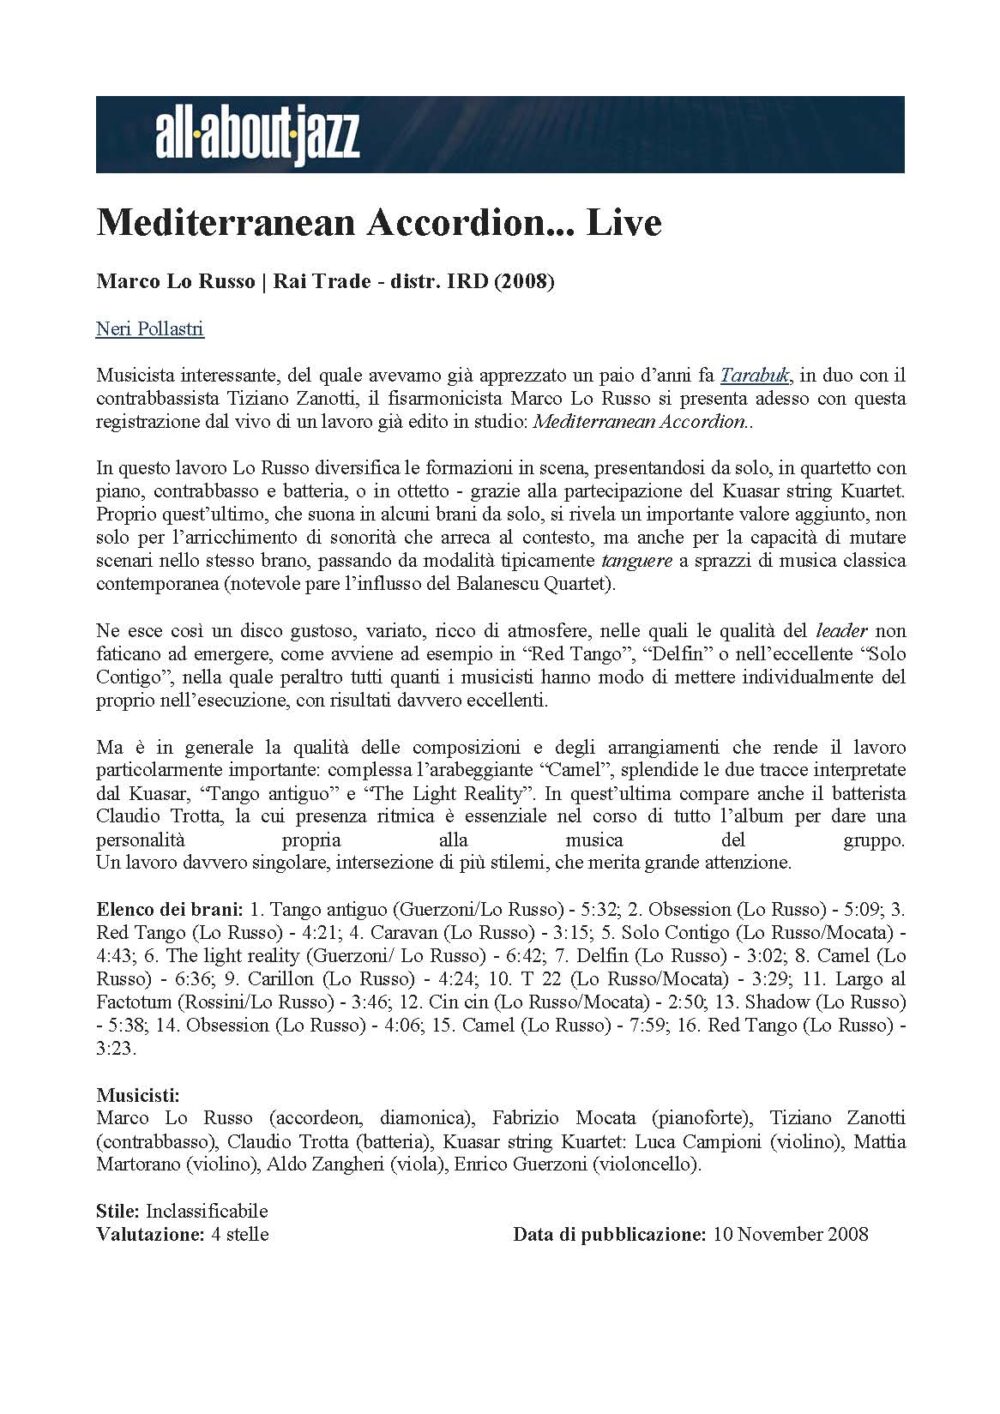 All about Jazz November 2008 Mediterranean Accordion Live